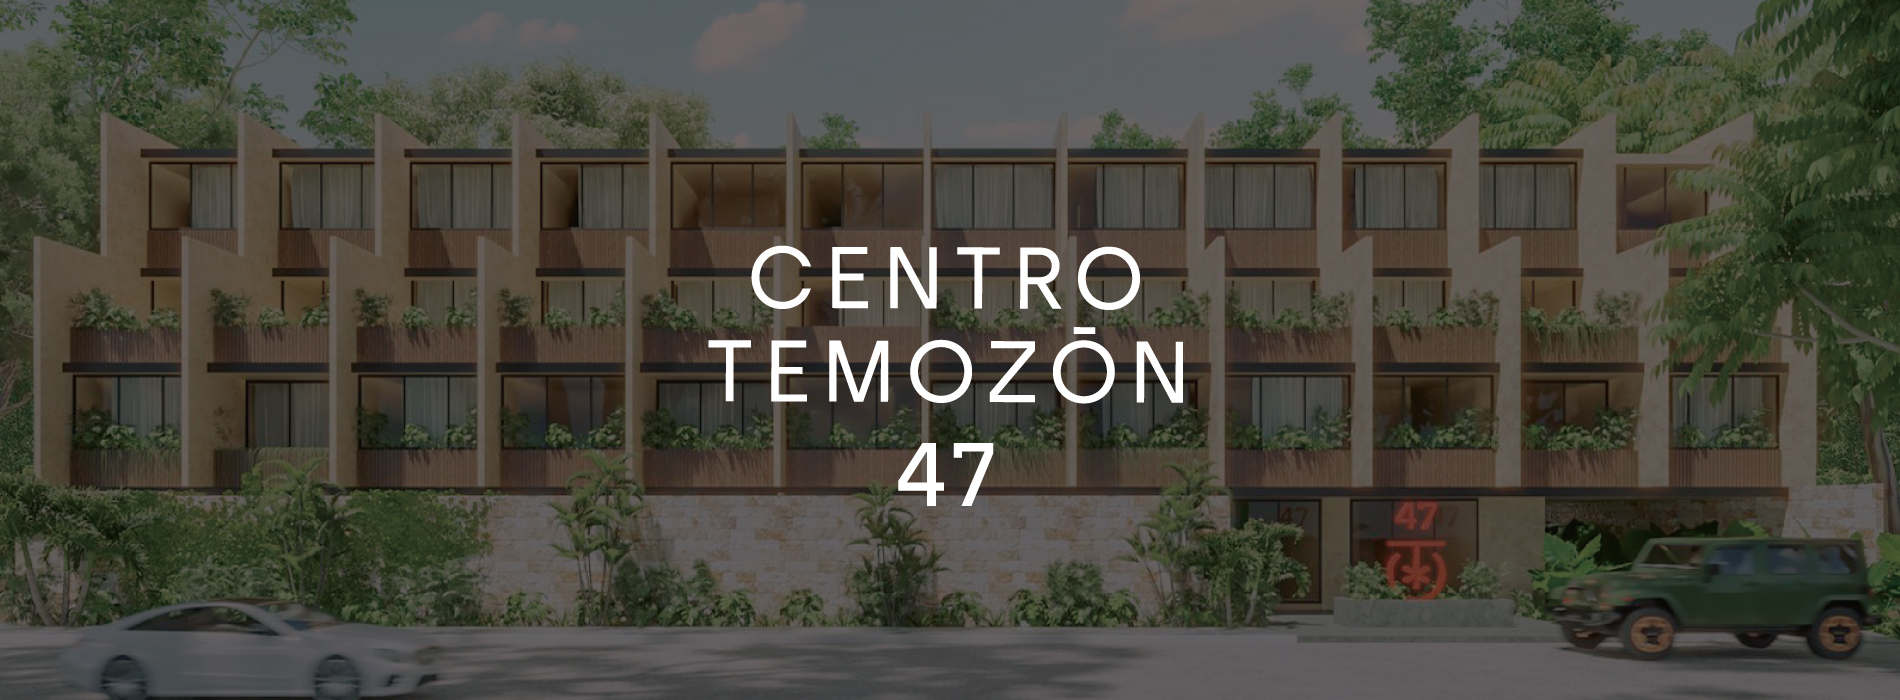 Departamentos Venta Mérida Centro Temozón 47 Goodlers